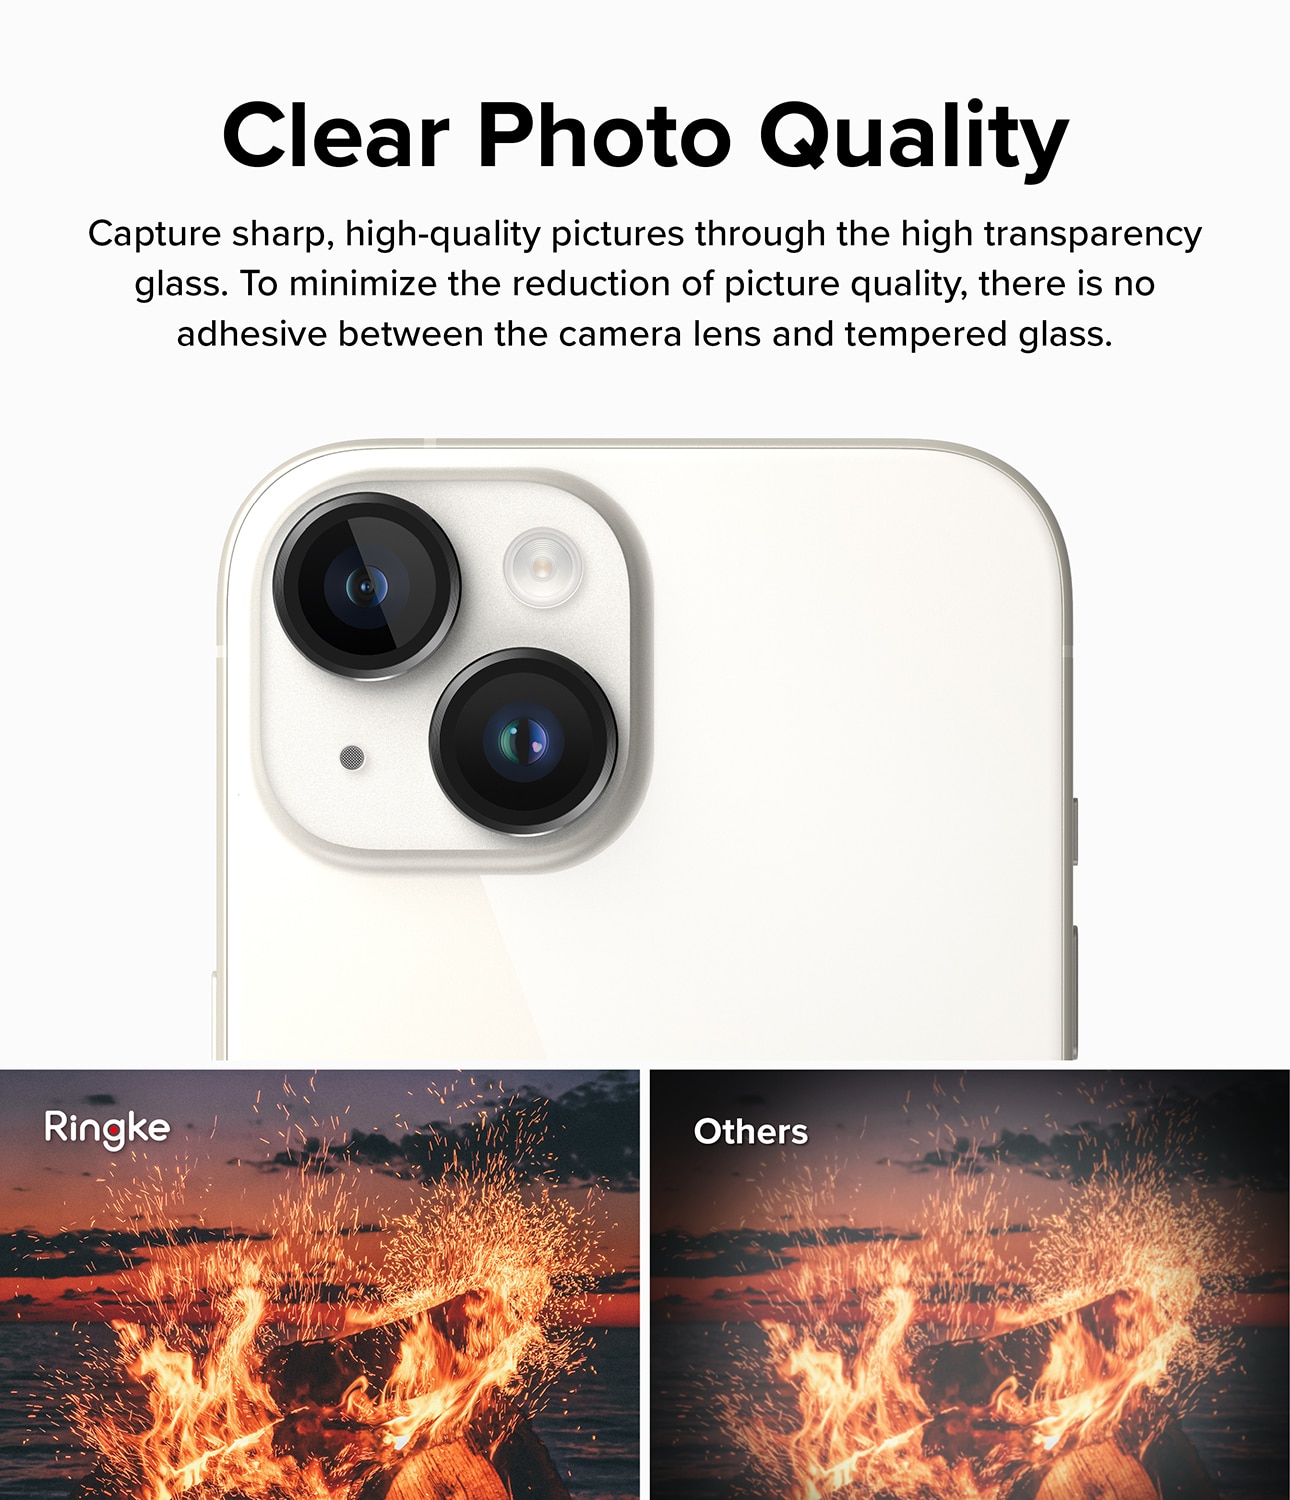 Camera Lens Frame Glass iPhone 15 Plus Black